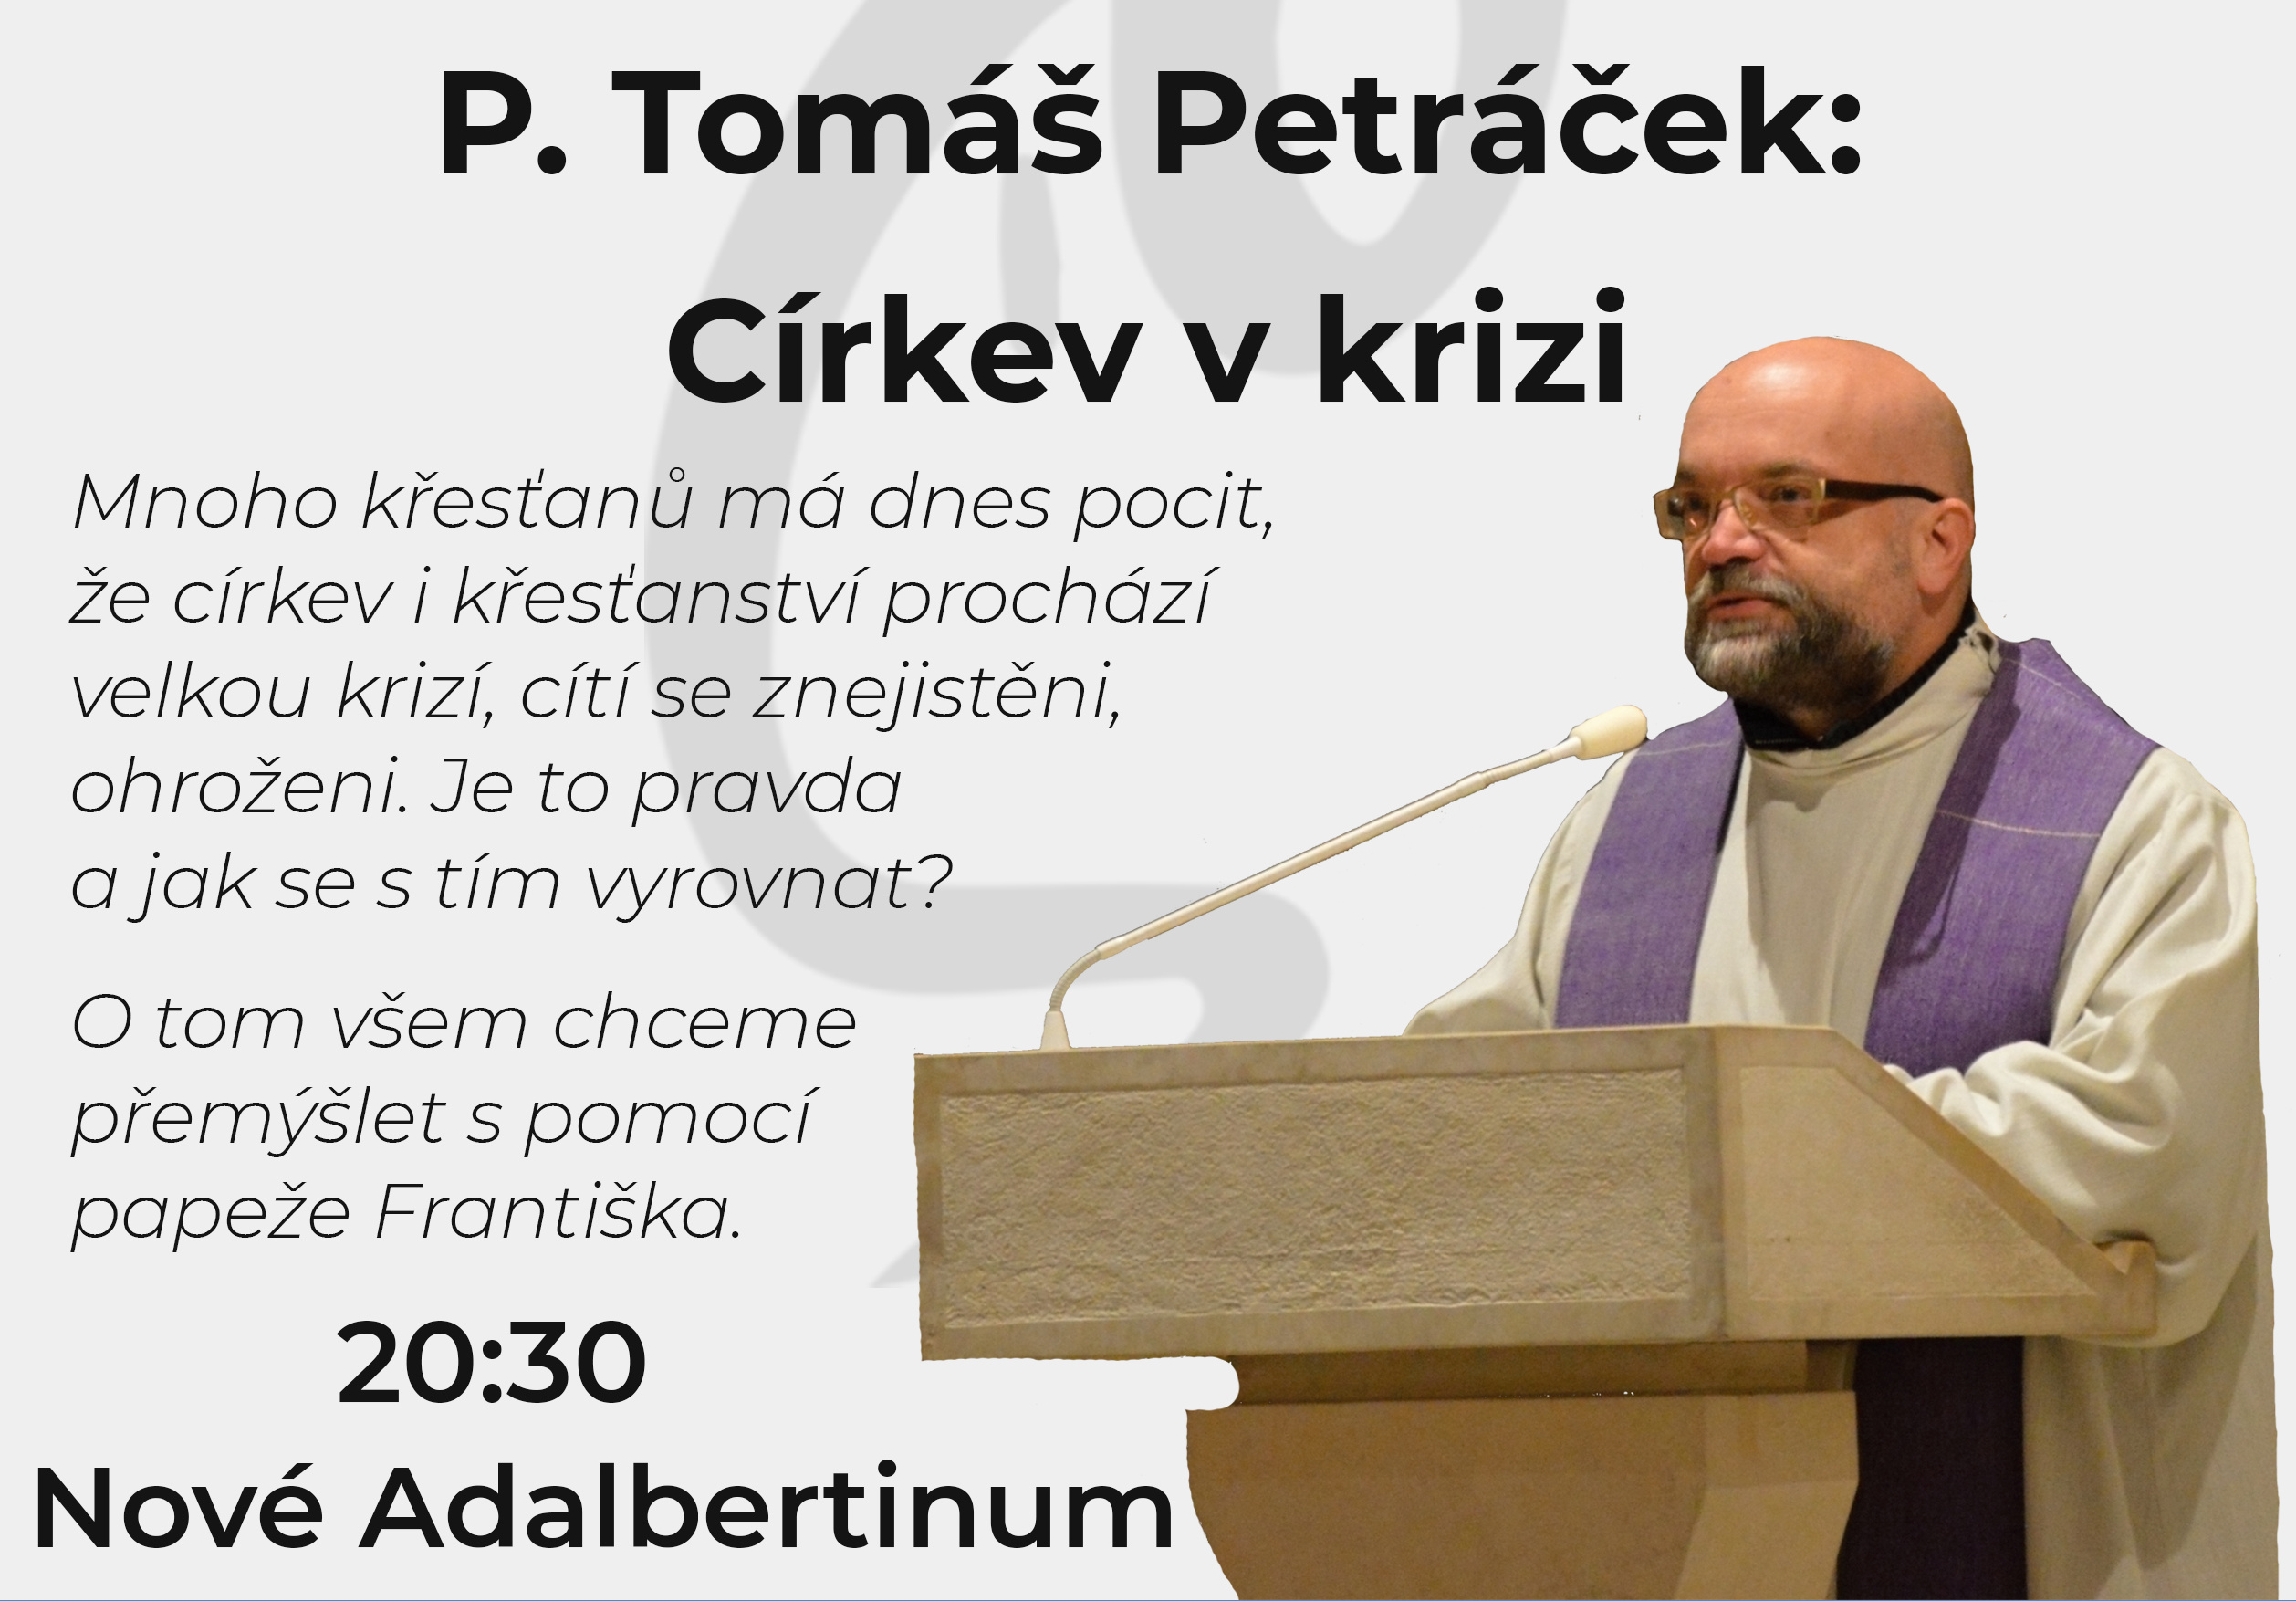 P. Tomáš Petráček - Církev v krizi